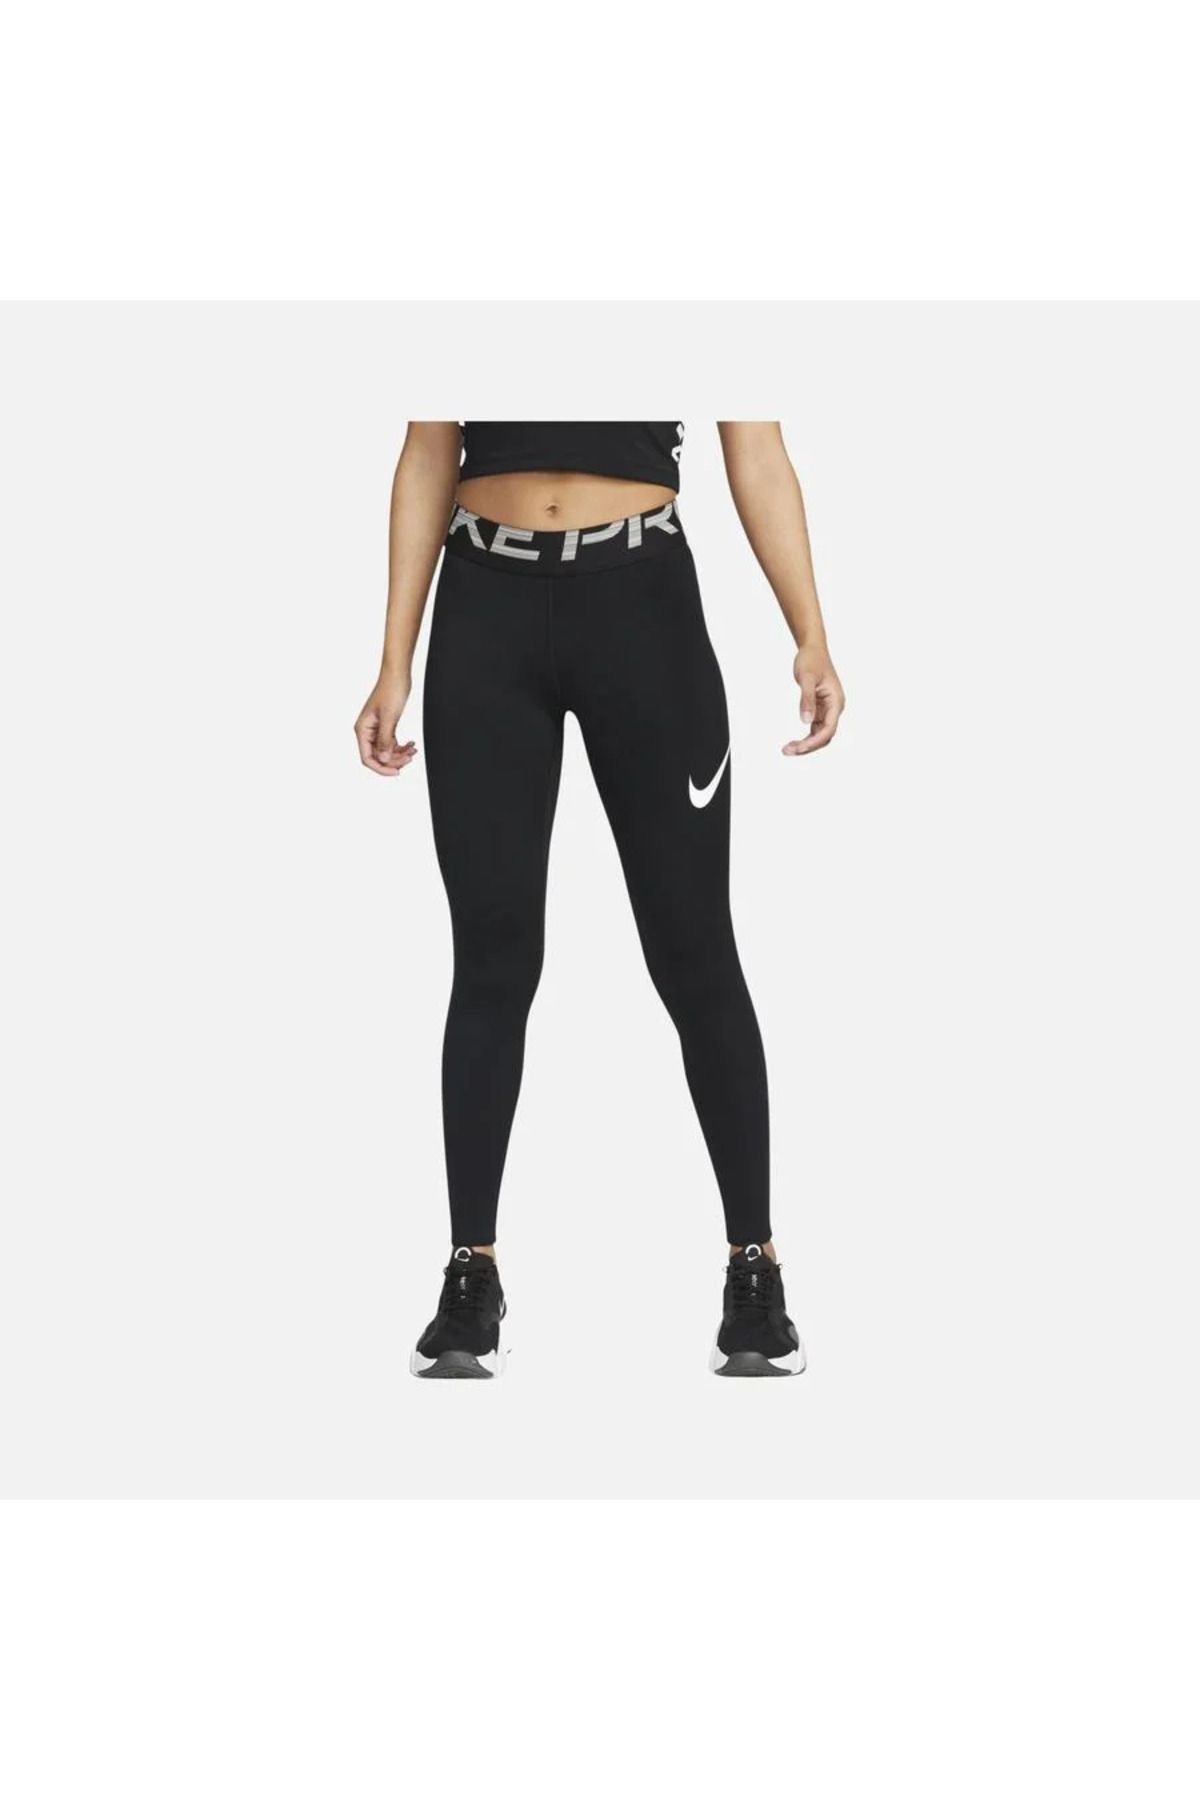 Nike Pro Training Space Dye Legging Tight Fit Black Gray Leggings - Trendyol